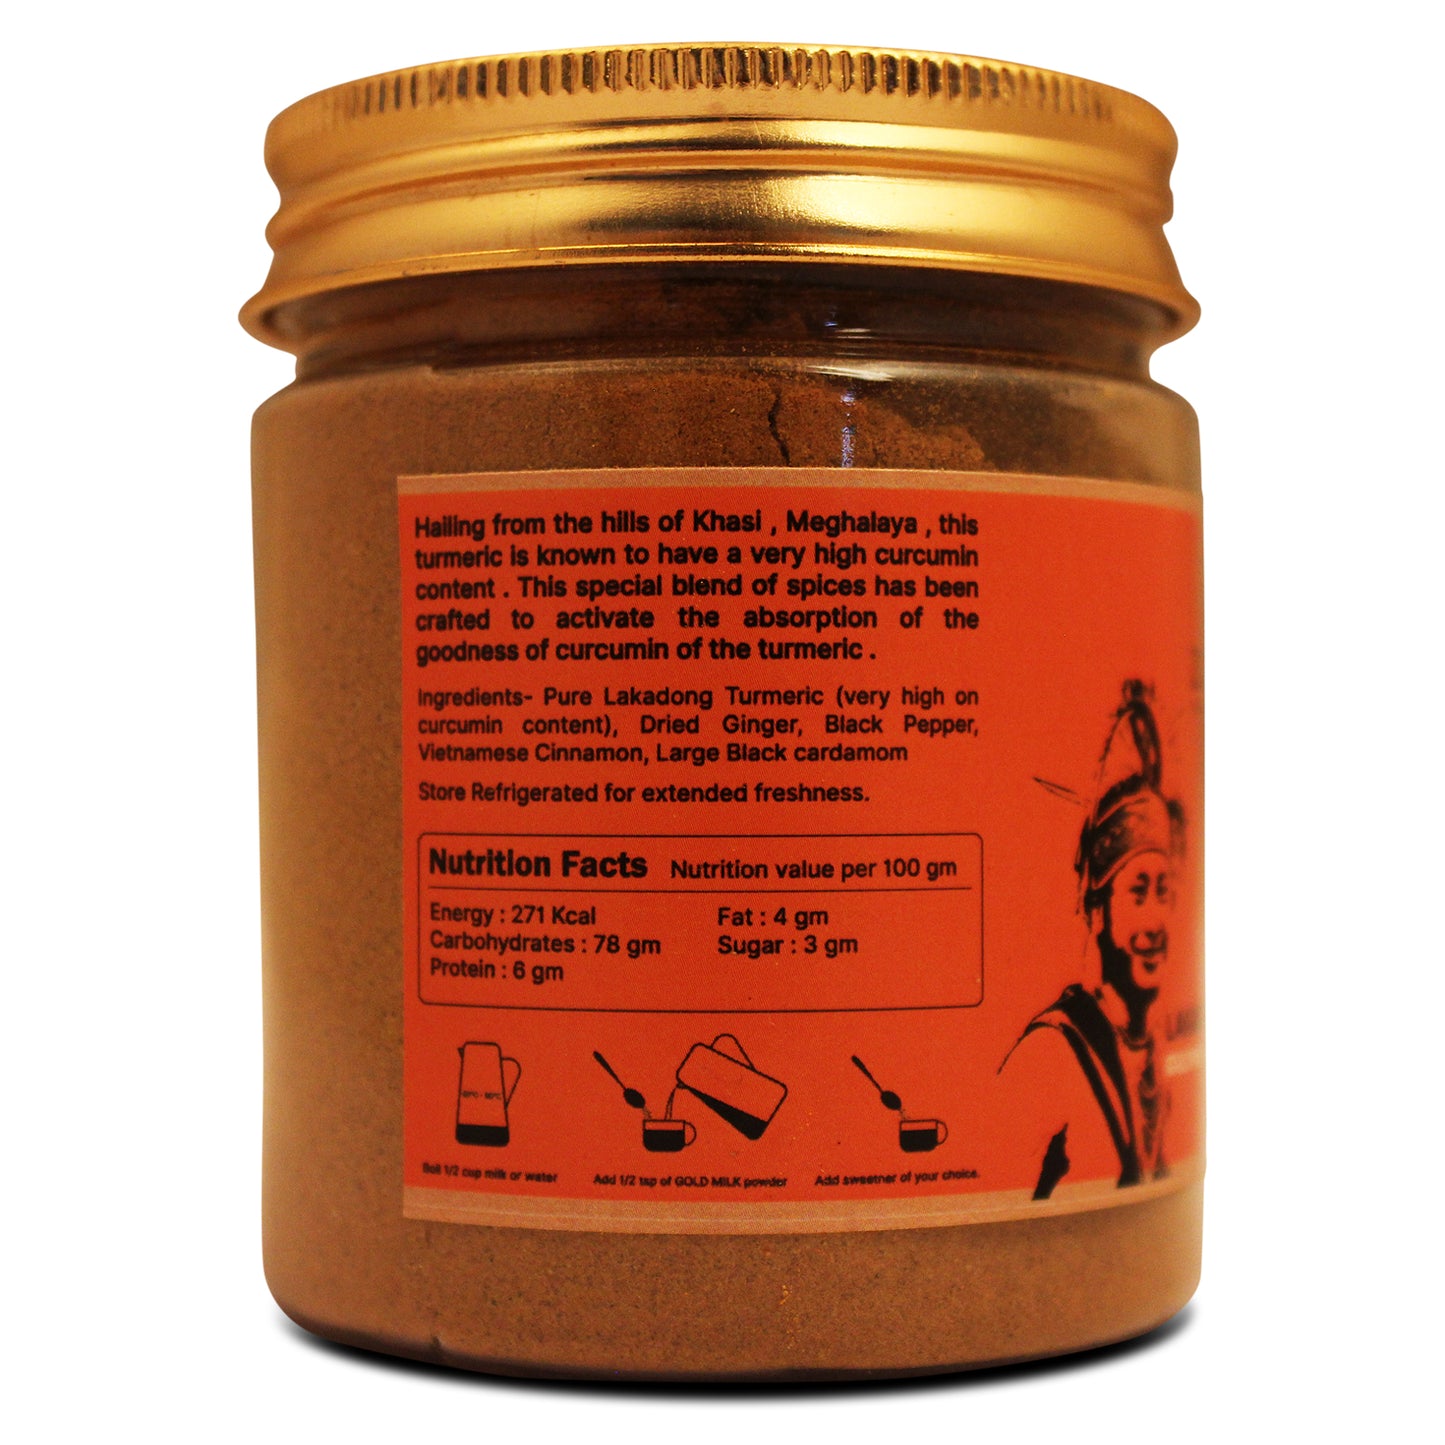 ZOROY THE FINESSE Lakadong Turmeric Gold Milk Masala | From Khasi hill of Meghalaya | High Curcumin Turmeric | Spice Mix | Immunity Booster Gold Latte | No artificial colors | No preservatives | 100G